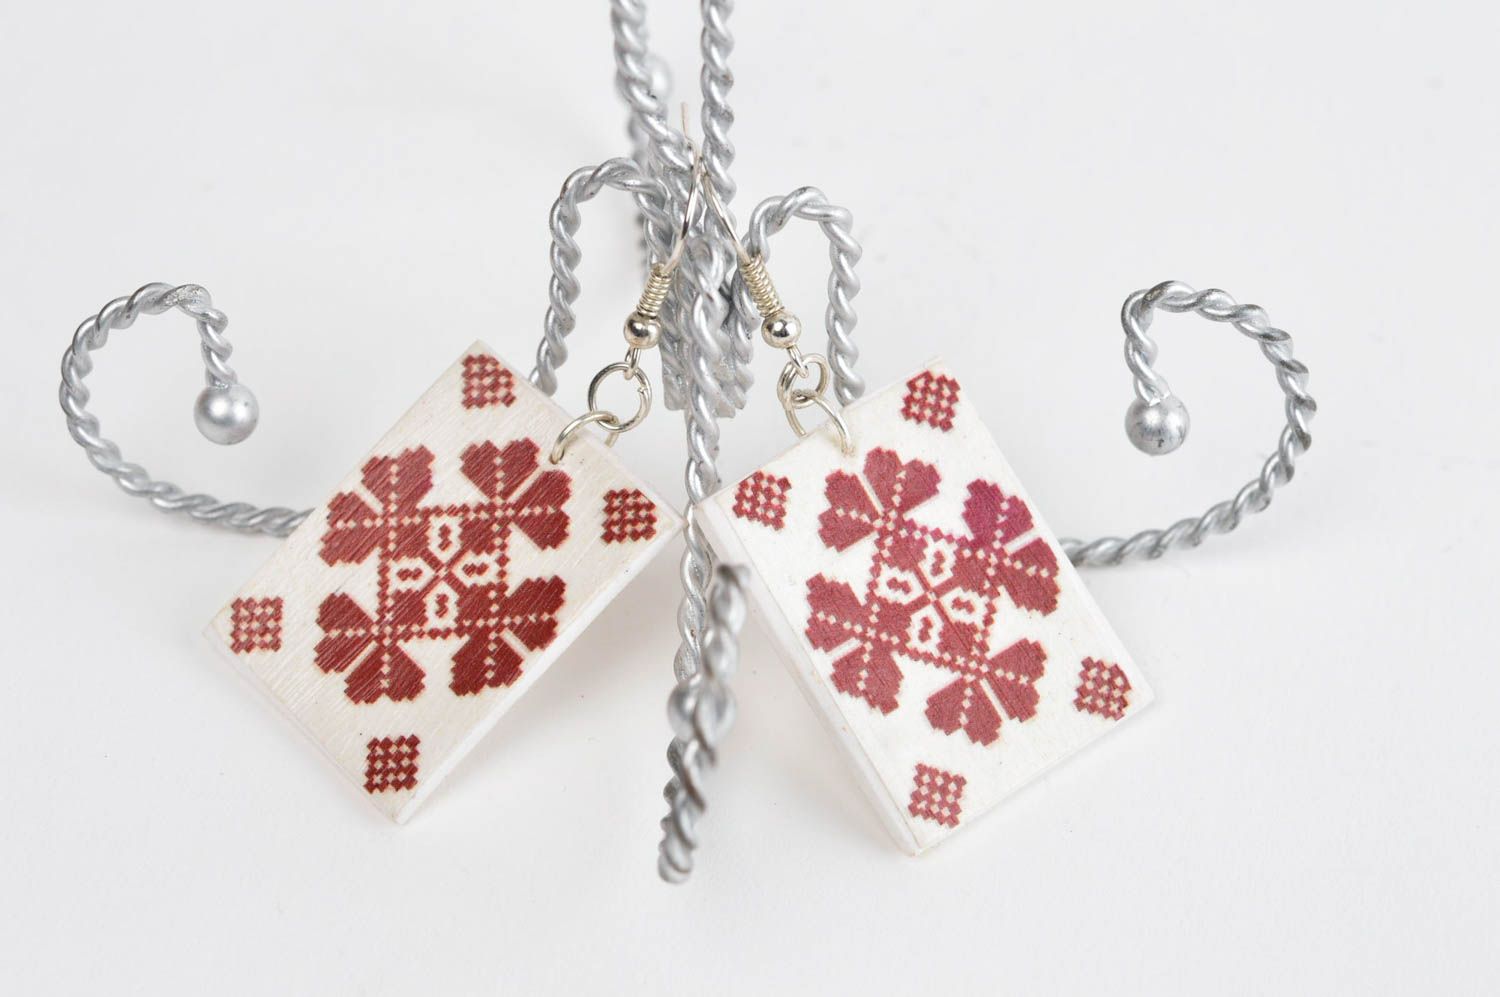 Stylish handmade wooden earrings artisan jewelry designs wood craft small gifts photo 1